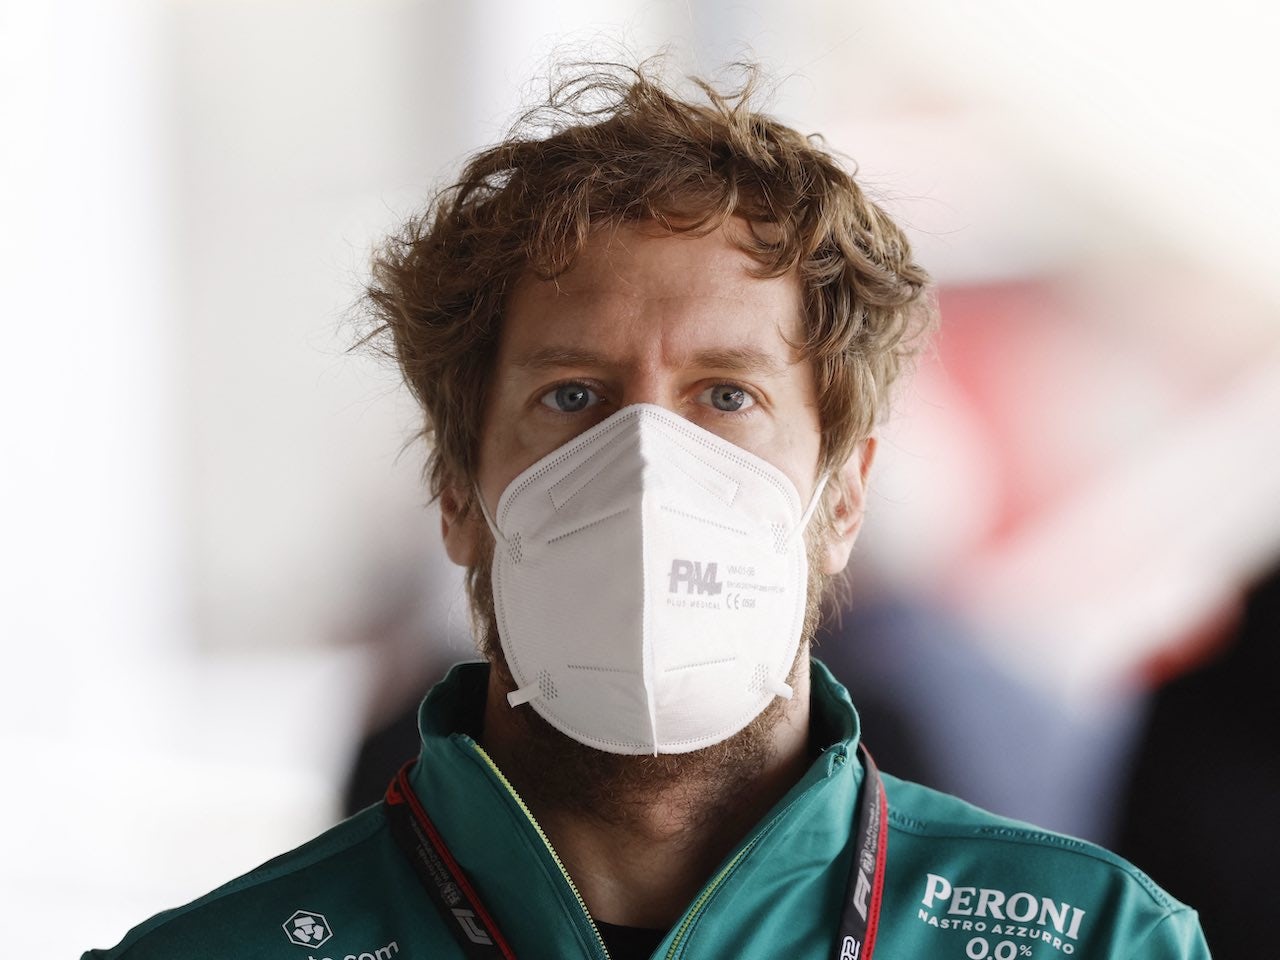 Vettel's 'no war' helmet caused political 'trouble'